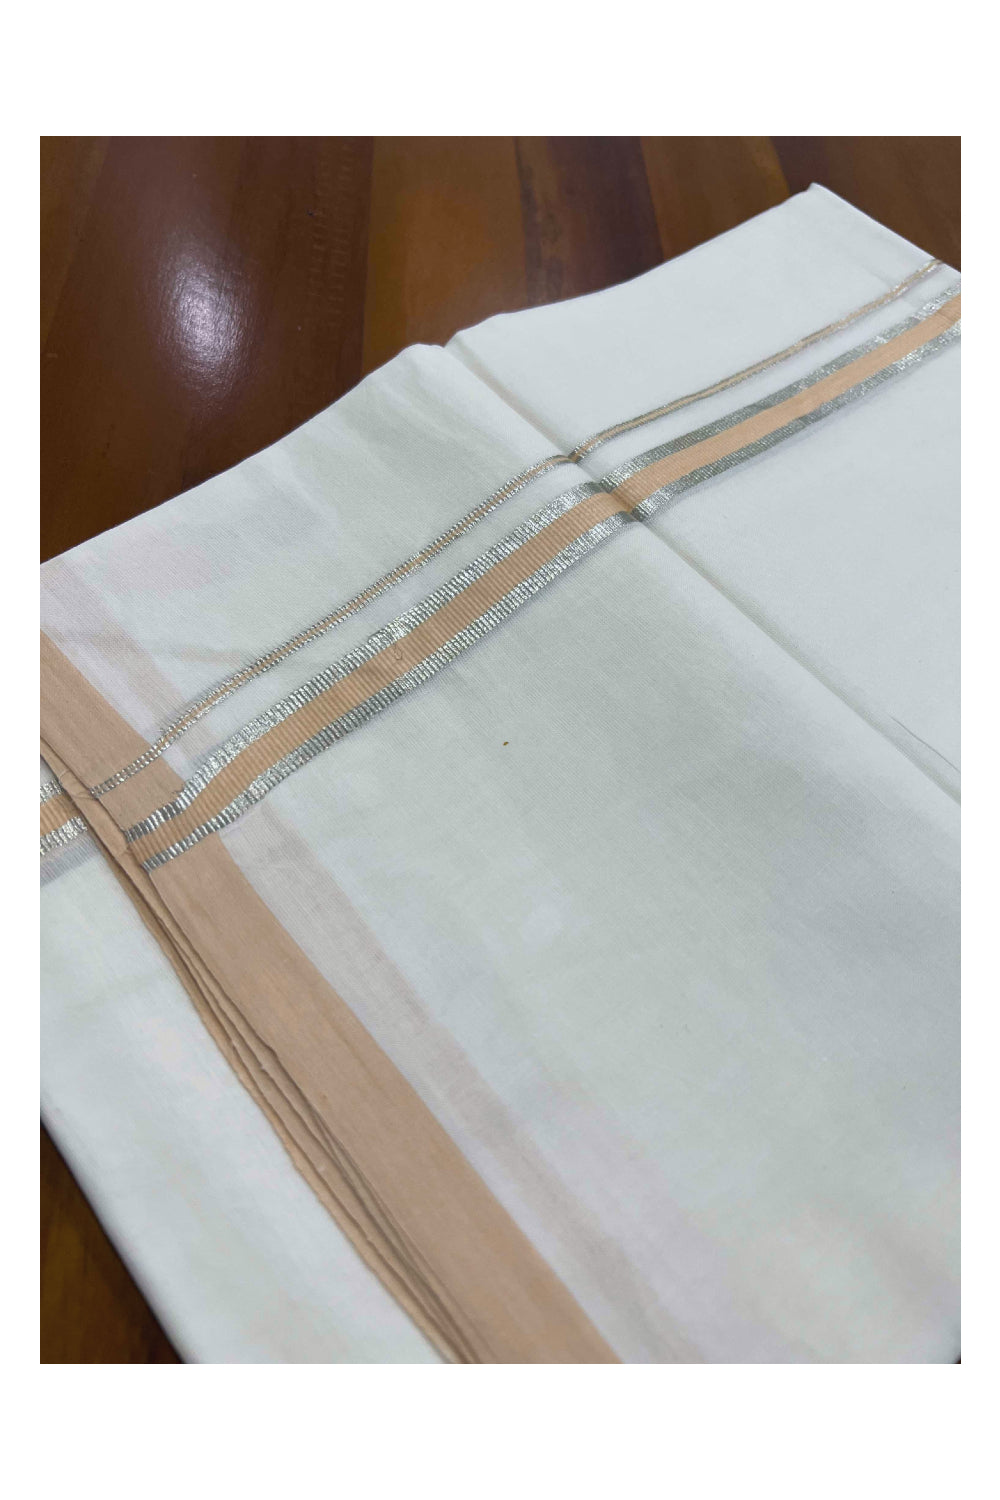 Pure White Cotton Mundu with Sandal and Silver Kara (South Indian Dhoti)